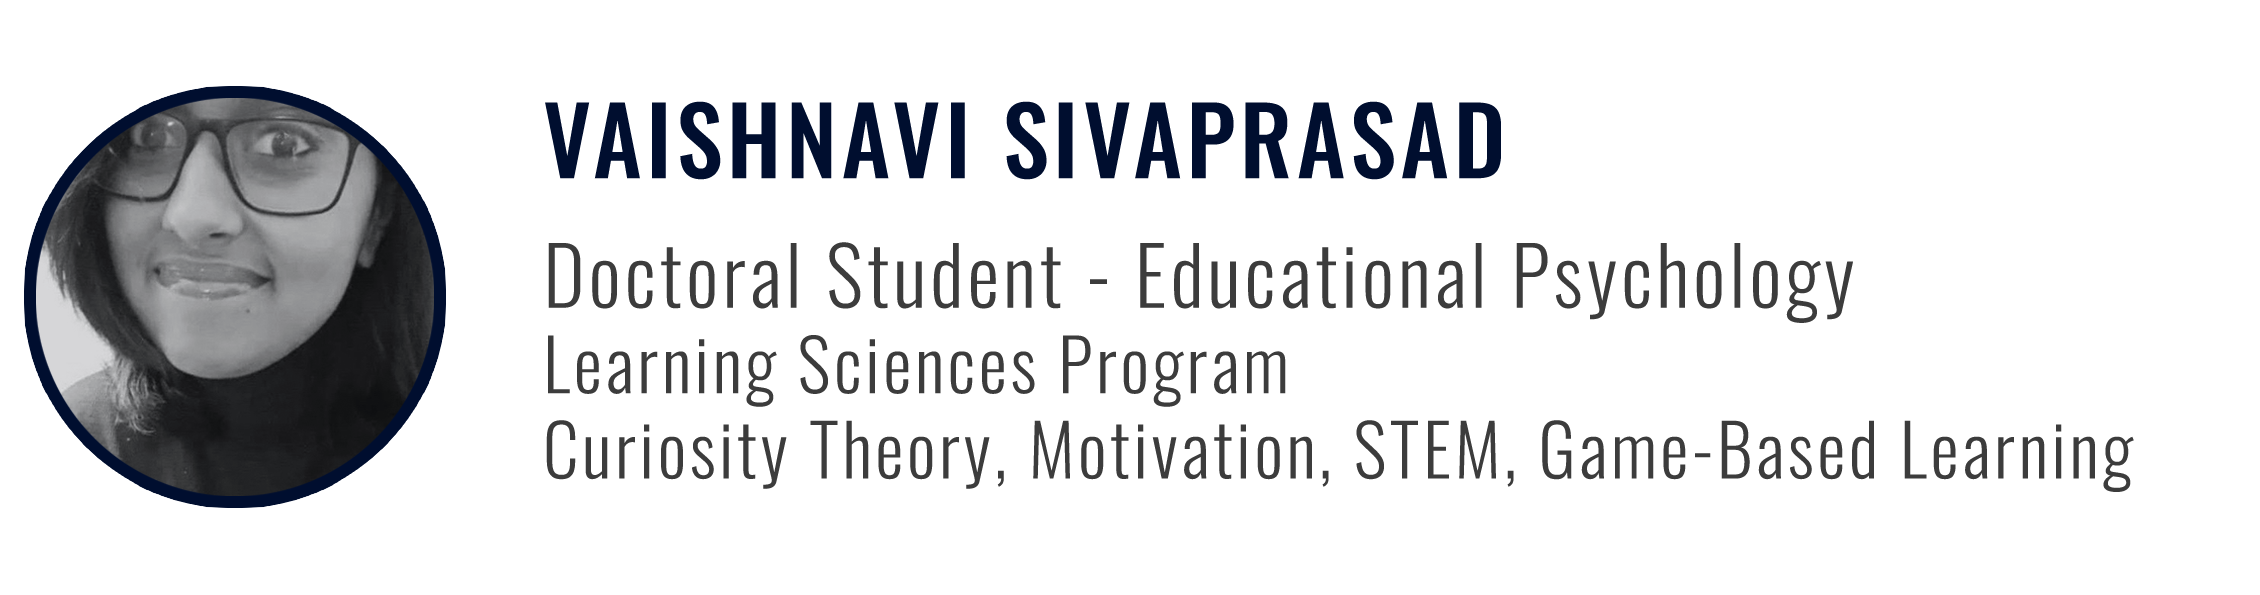 Vaishnavi Sivaprasad - Doctoral Student